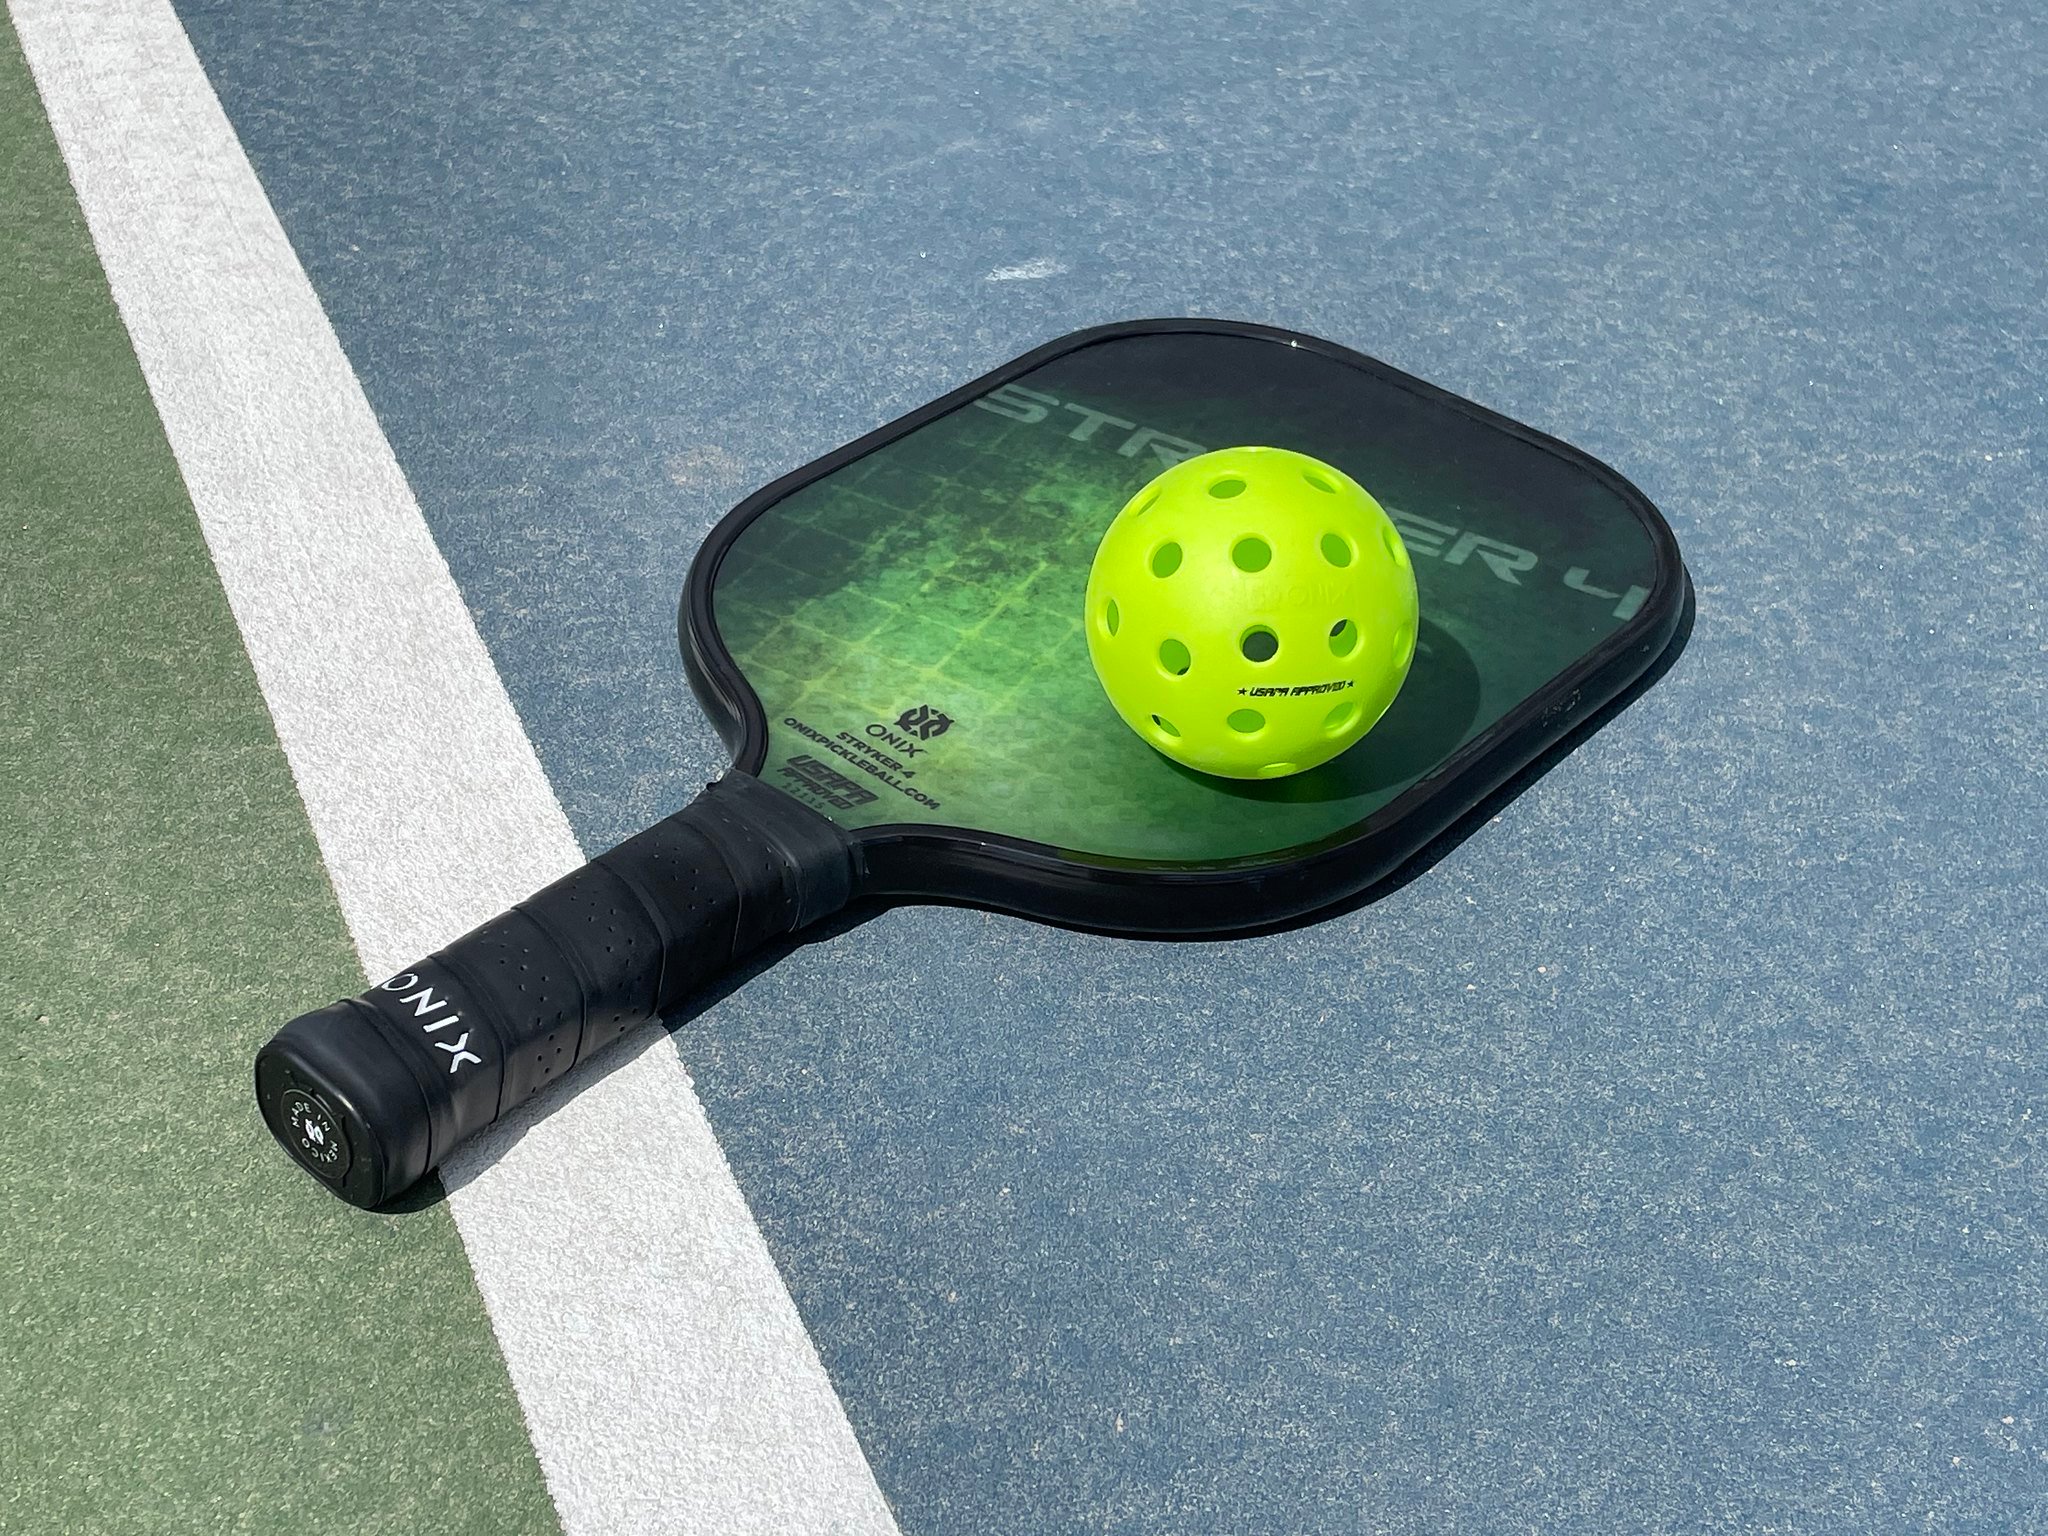 A pickleball racket on a court.